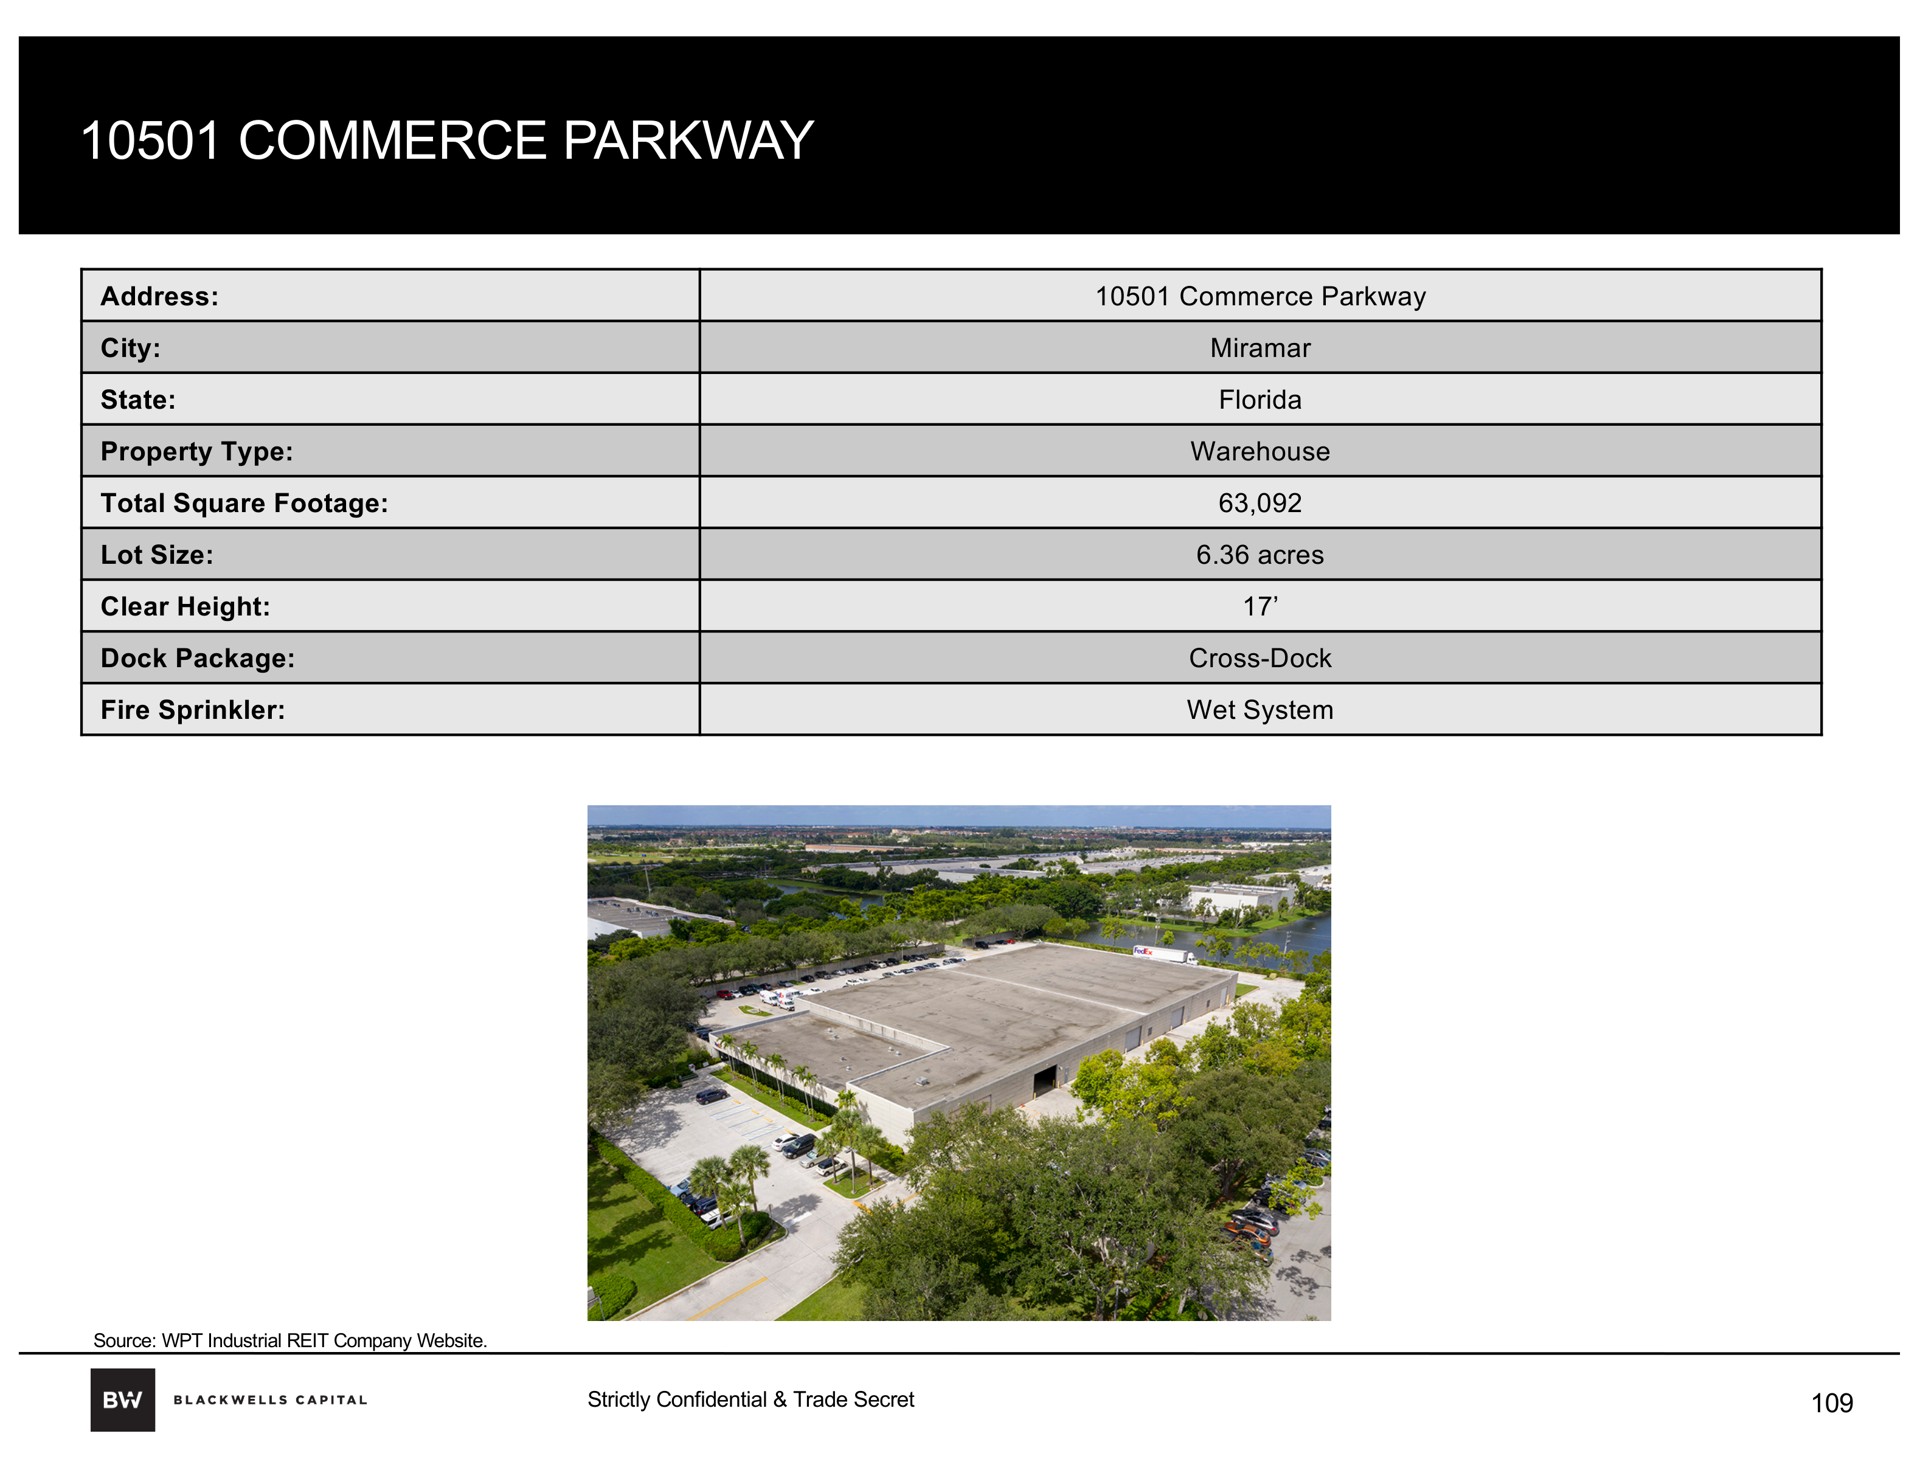 commerce parkway a | Blackwells Capital